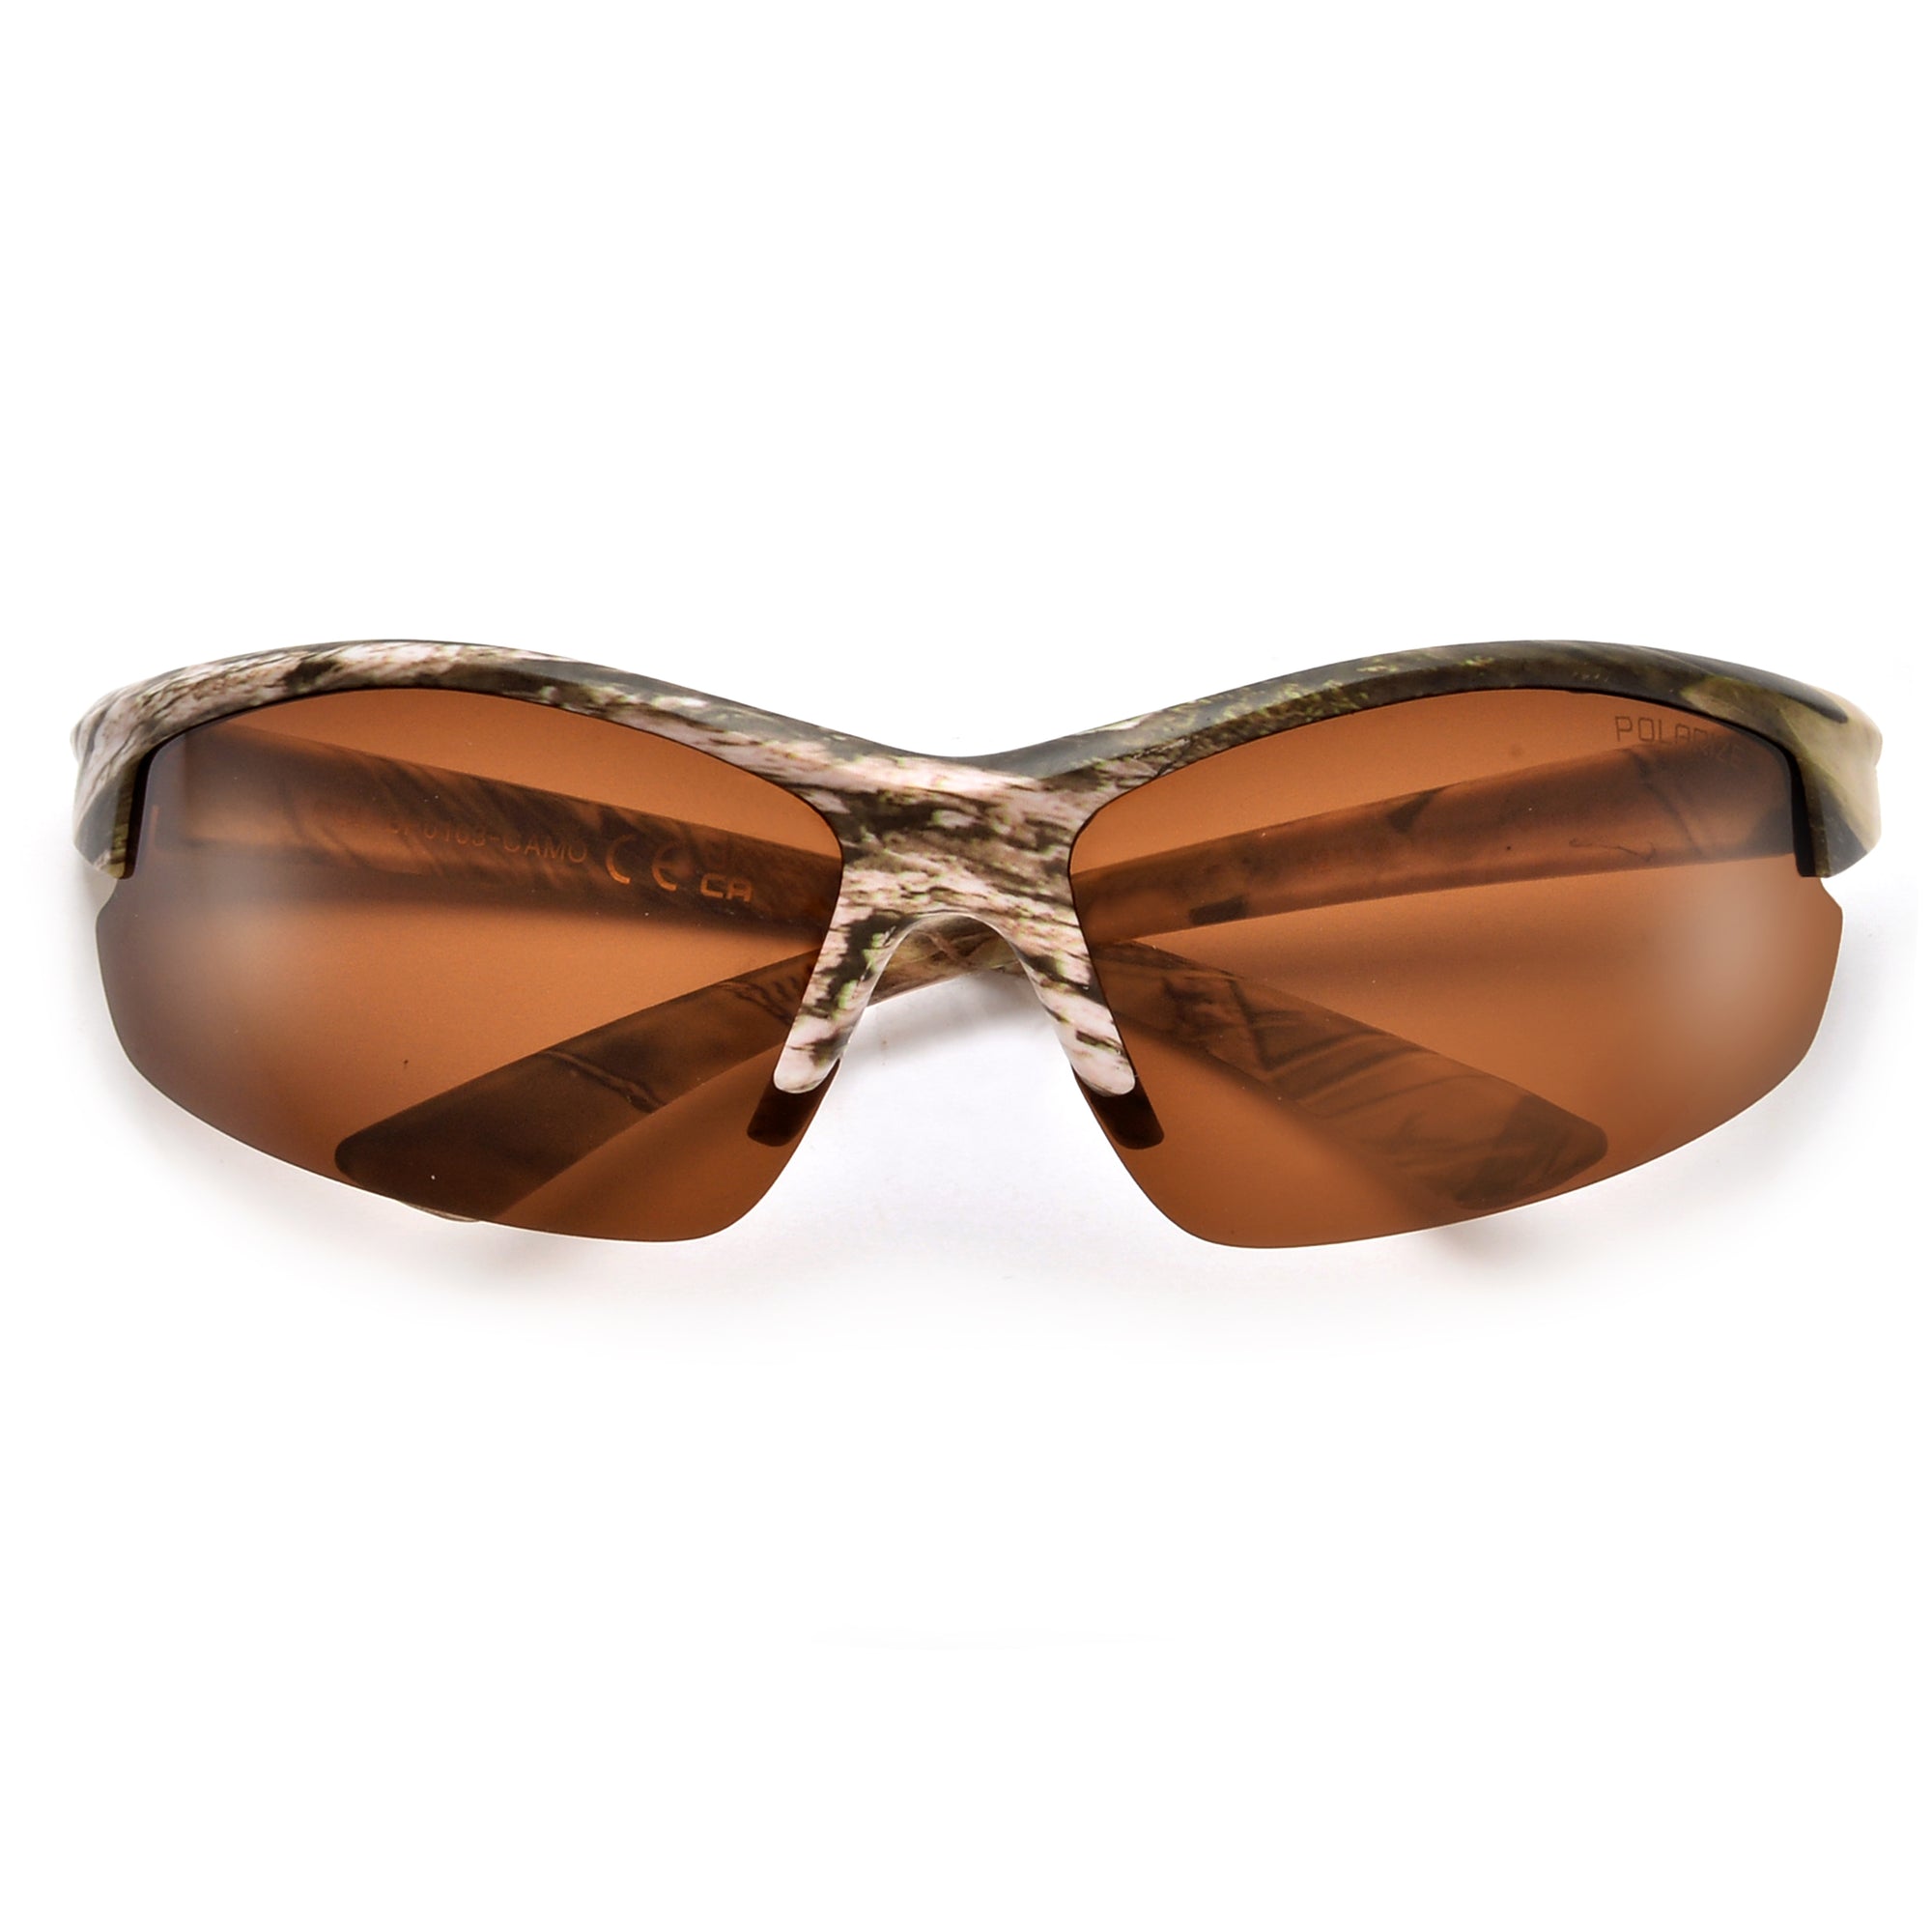 Polarized Sporty Light Weight Half Frame Hunting Camo Sunglasses